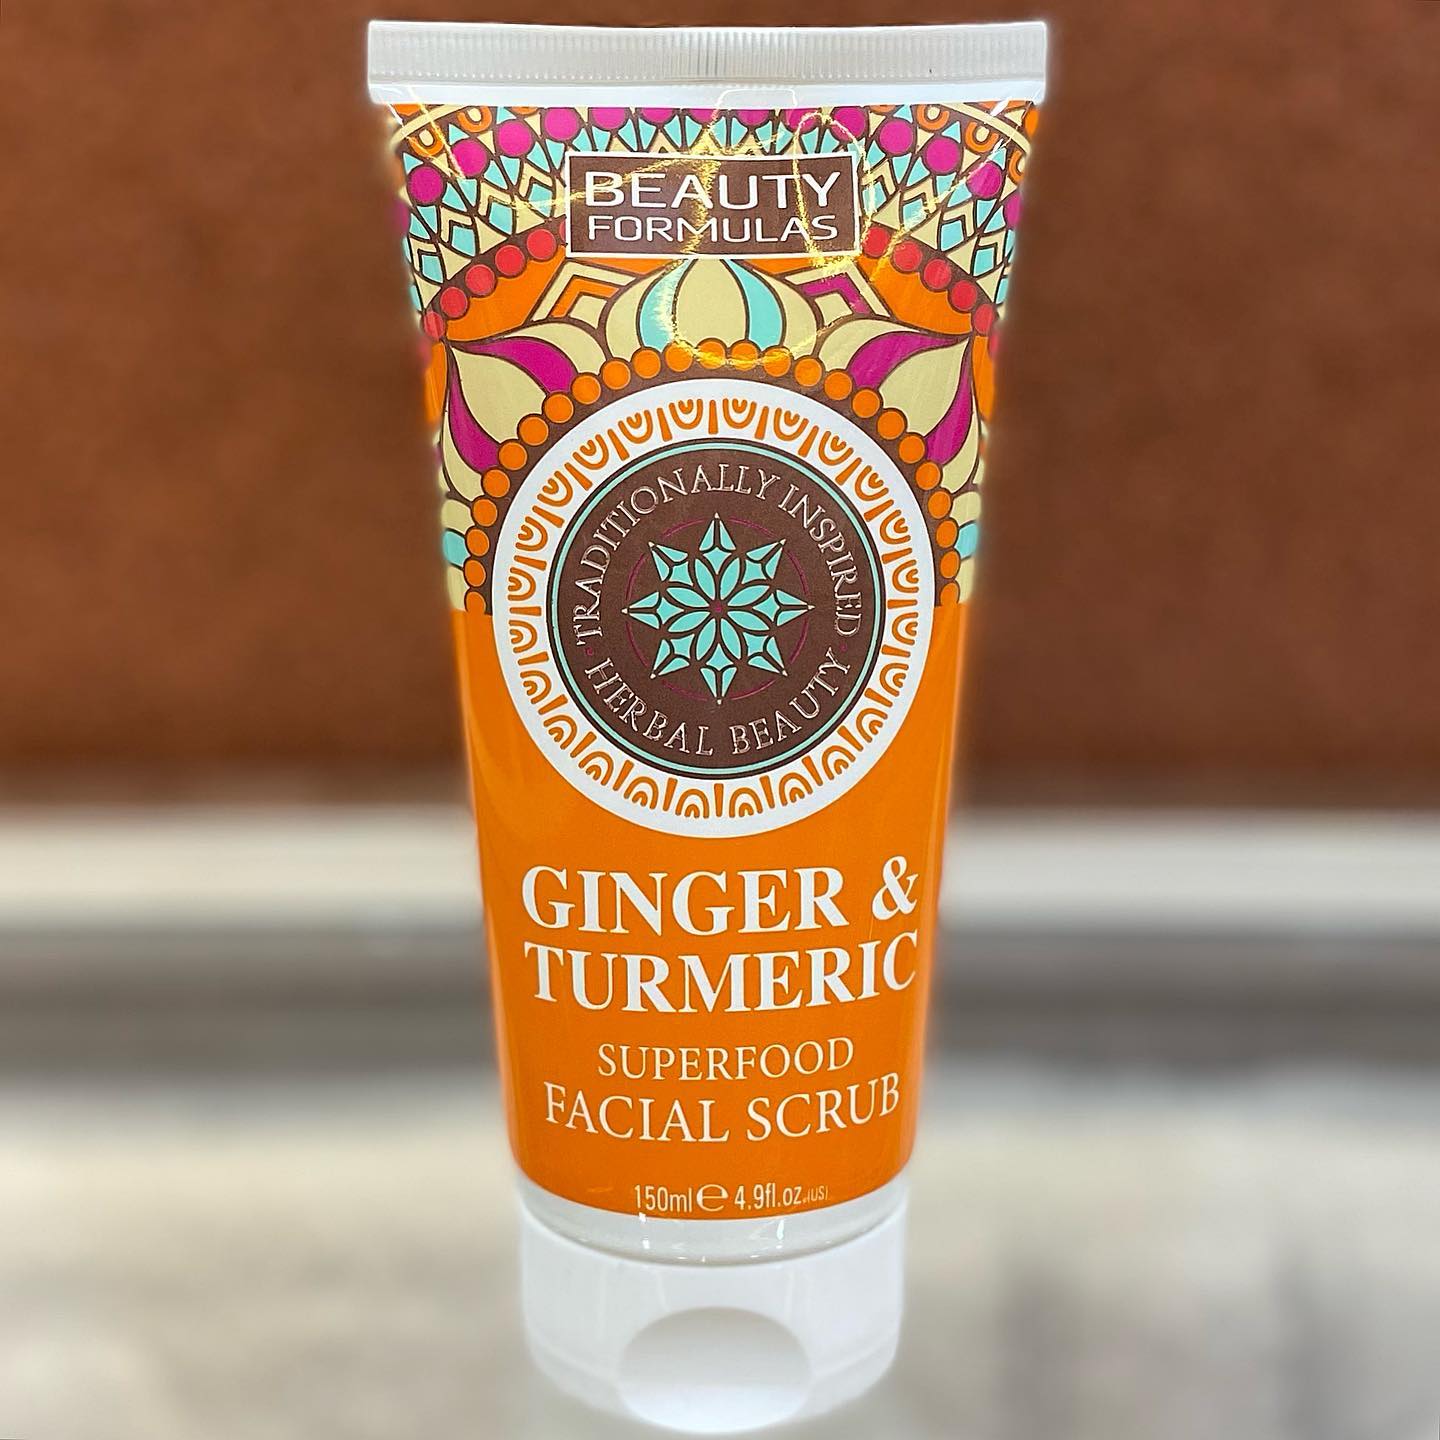 Beauty Formulas Ginger & Tumeric Facial Scrub